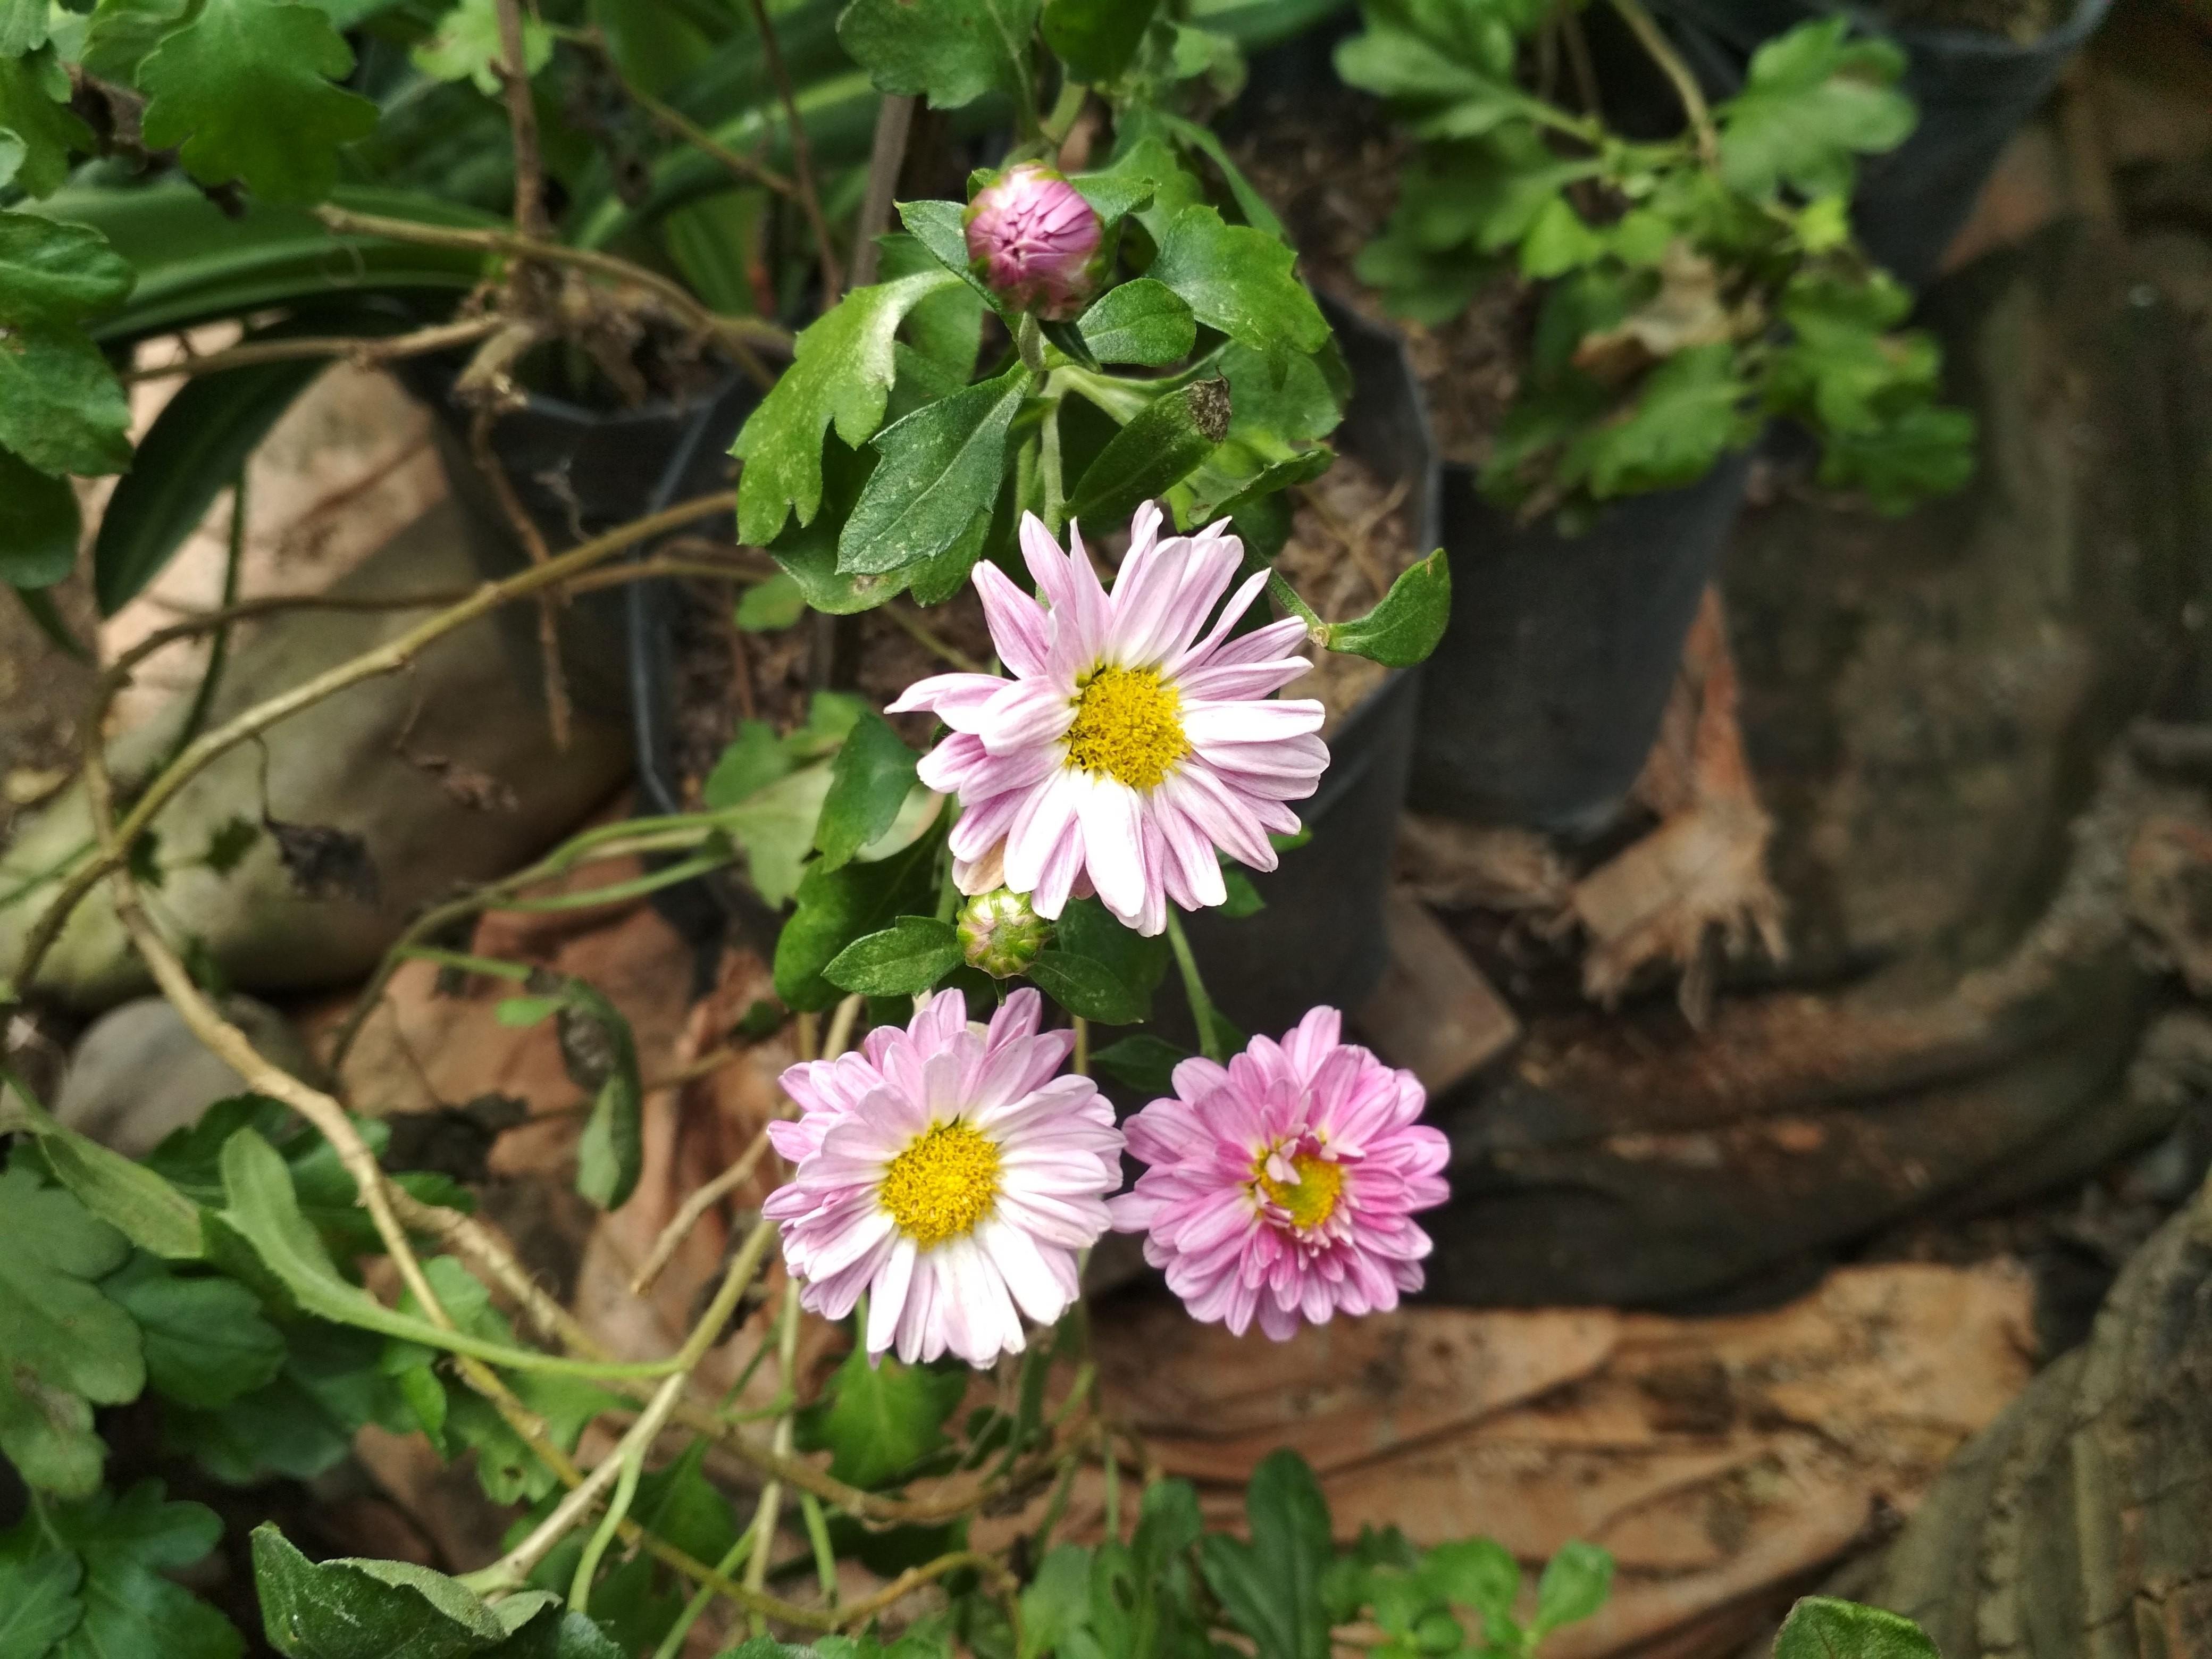  Paling  Bagus  10 Bunga  Dahlia Yang  Gambar  Bunga  Indah